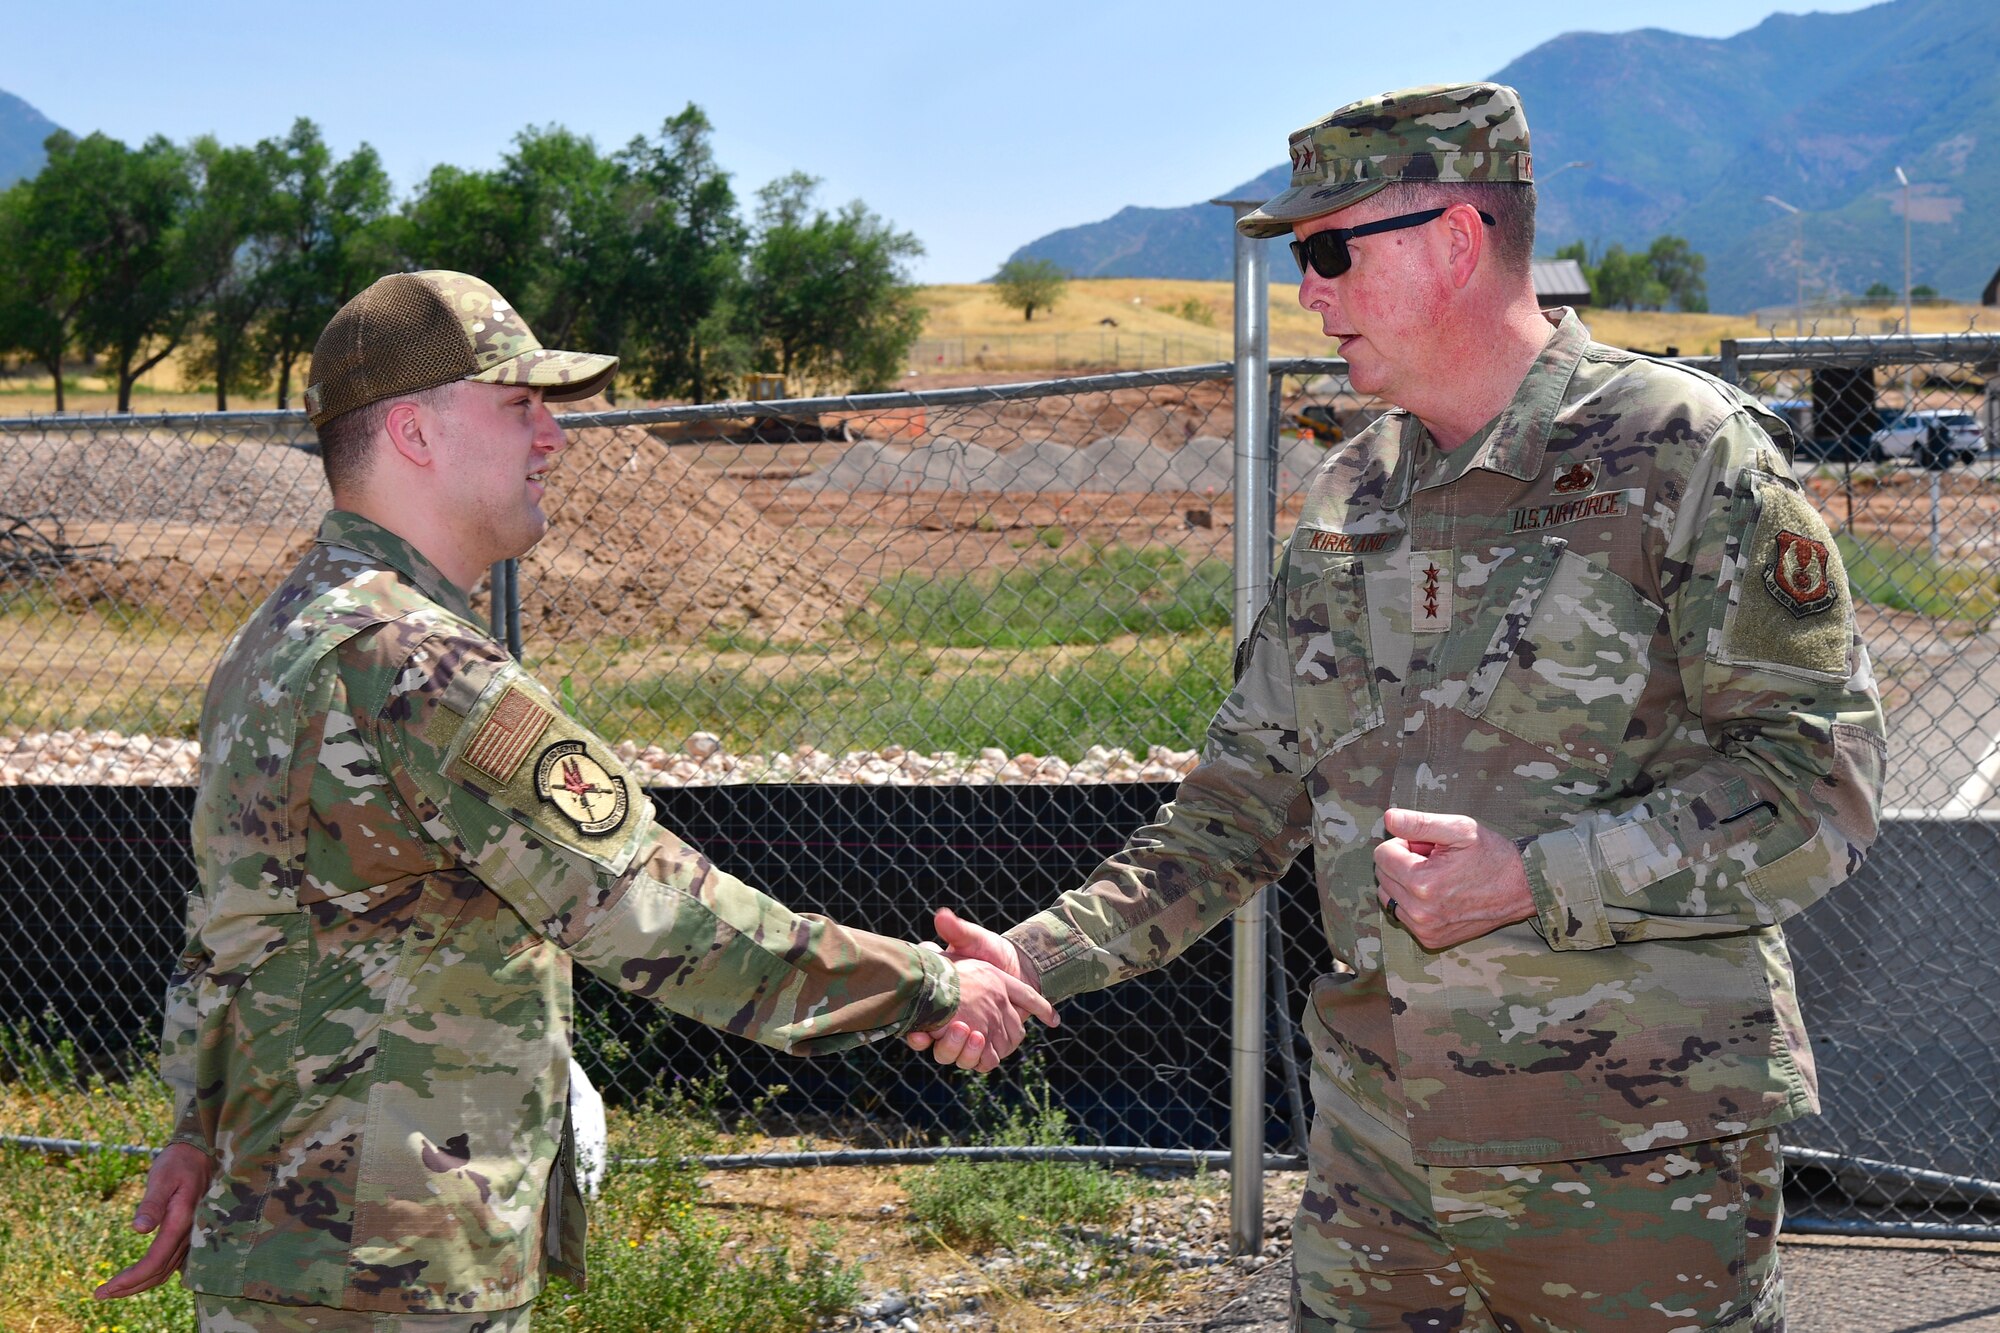 Senior Airman Stirling shakes hands with Lt. Gen. Kirkland.